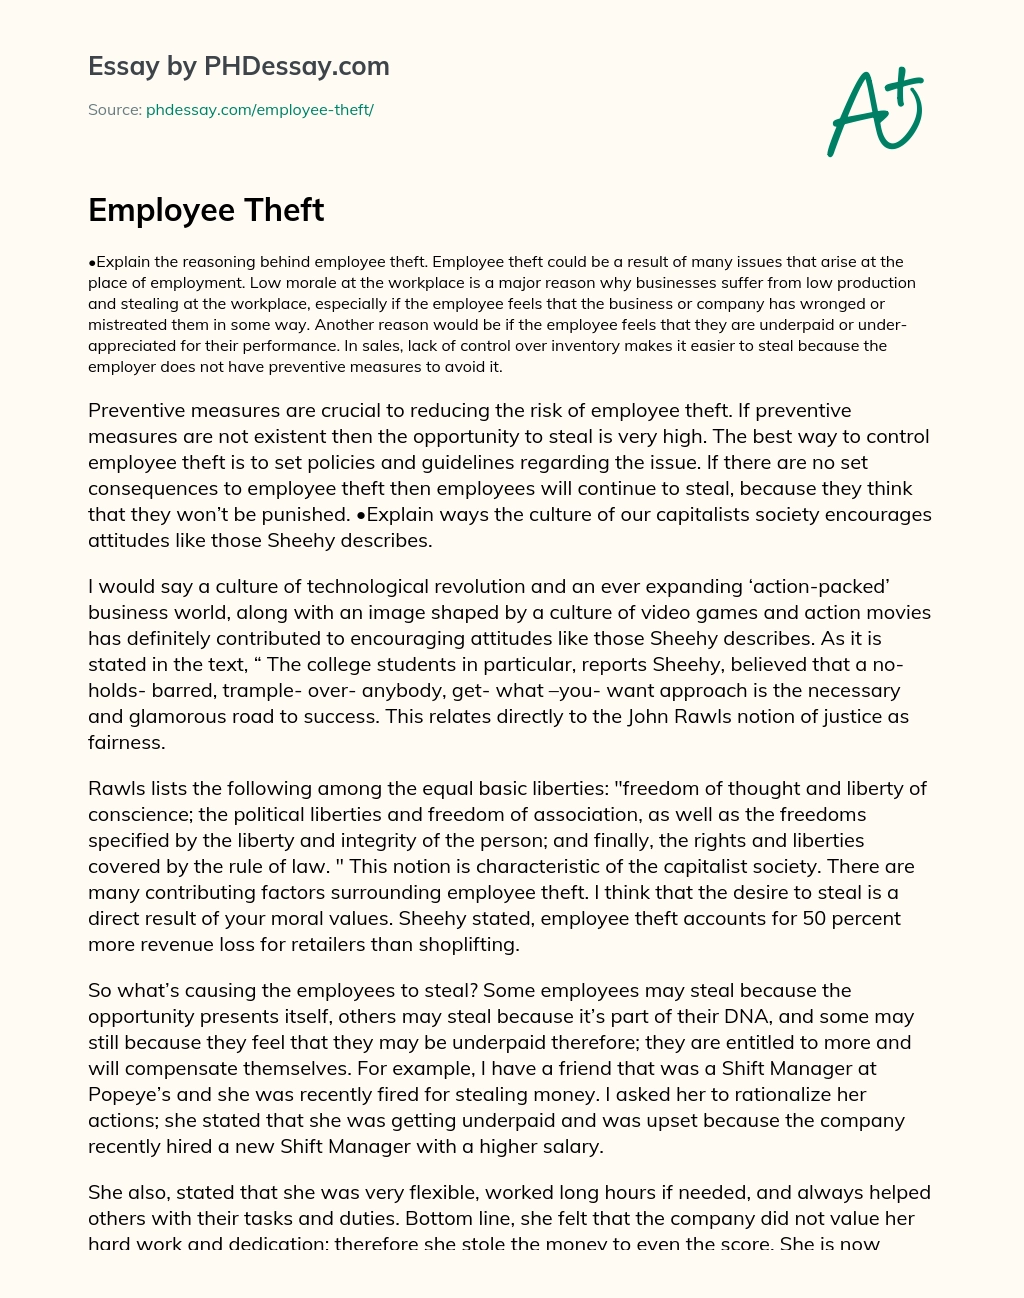 Employee Theft essay